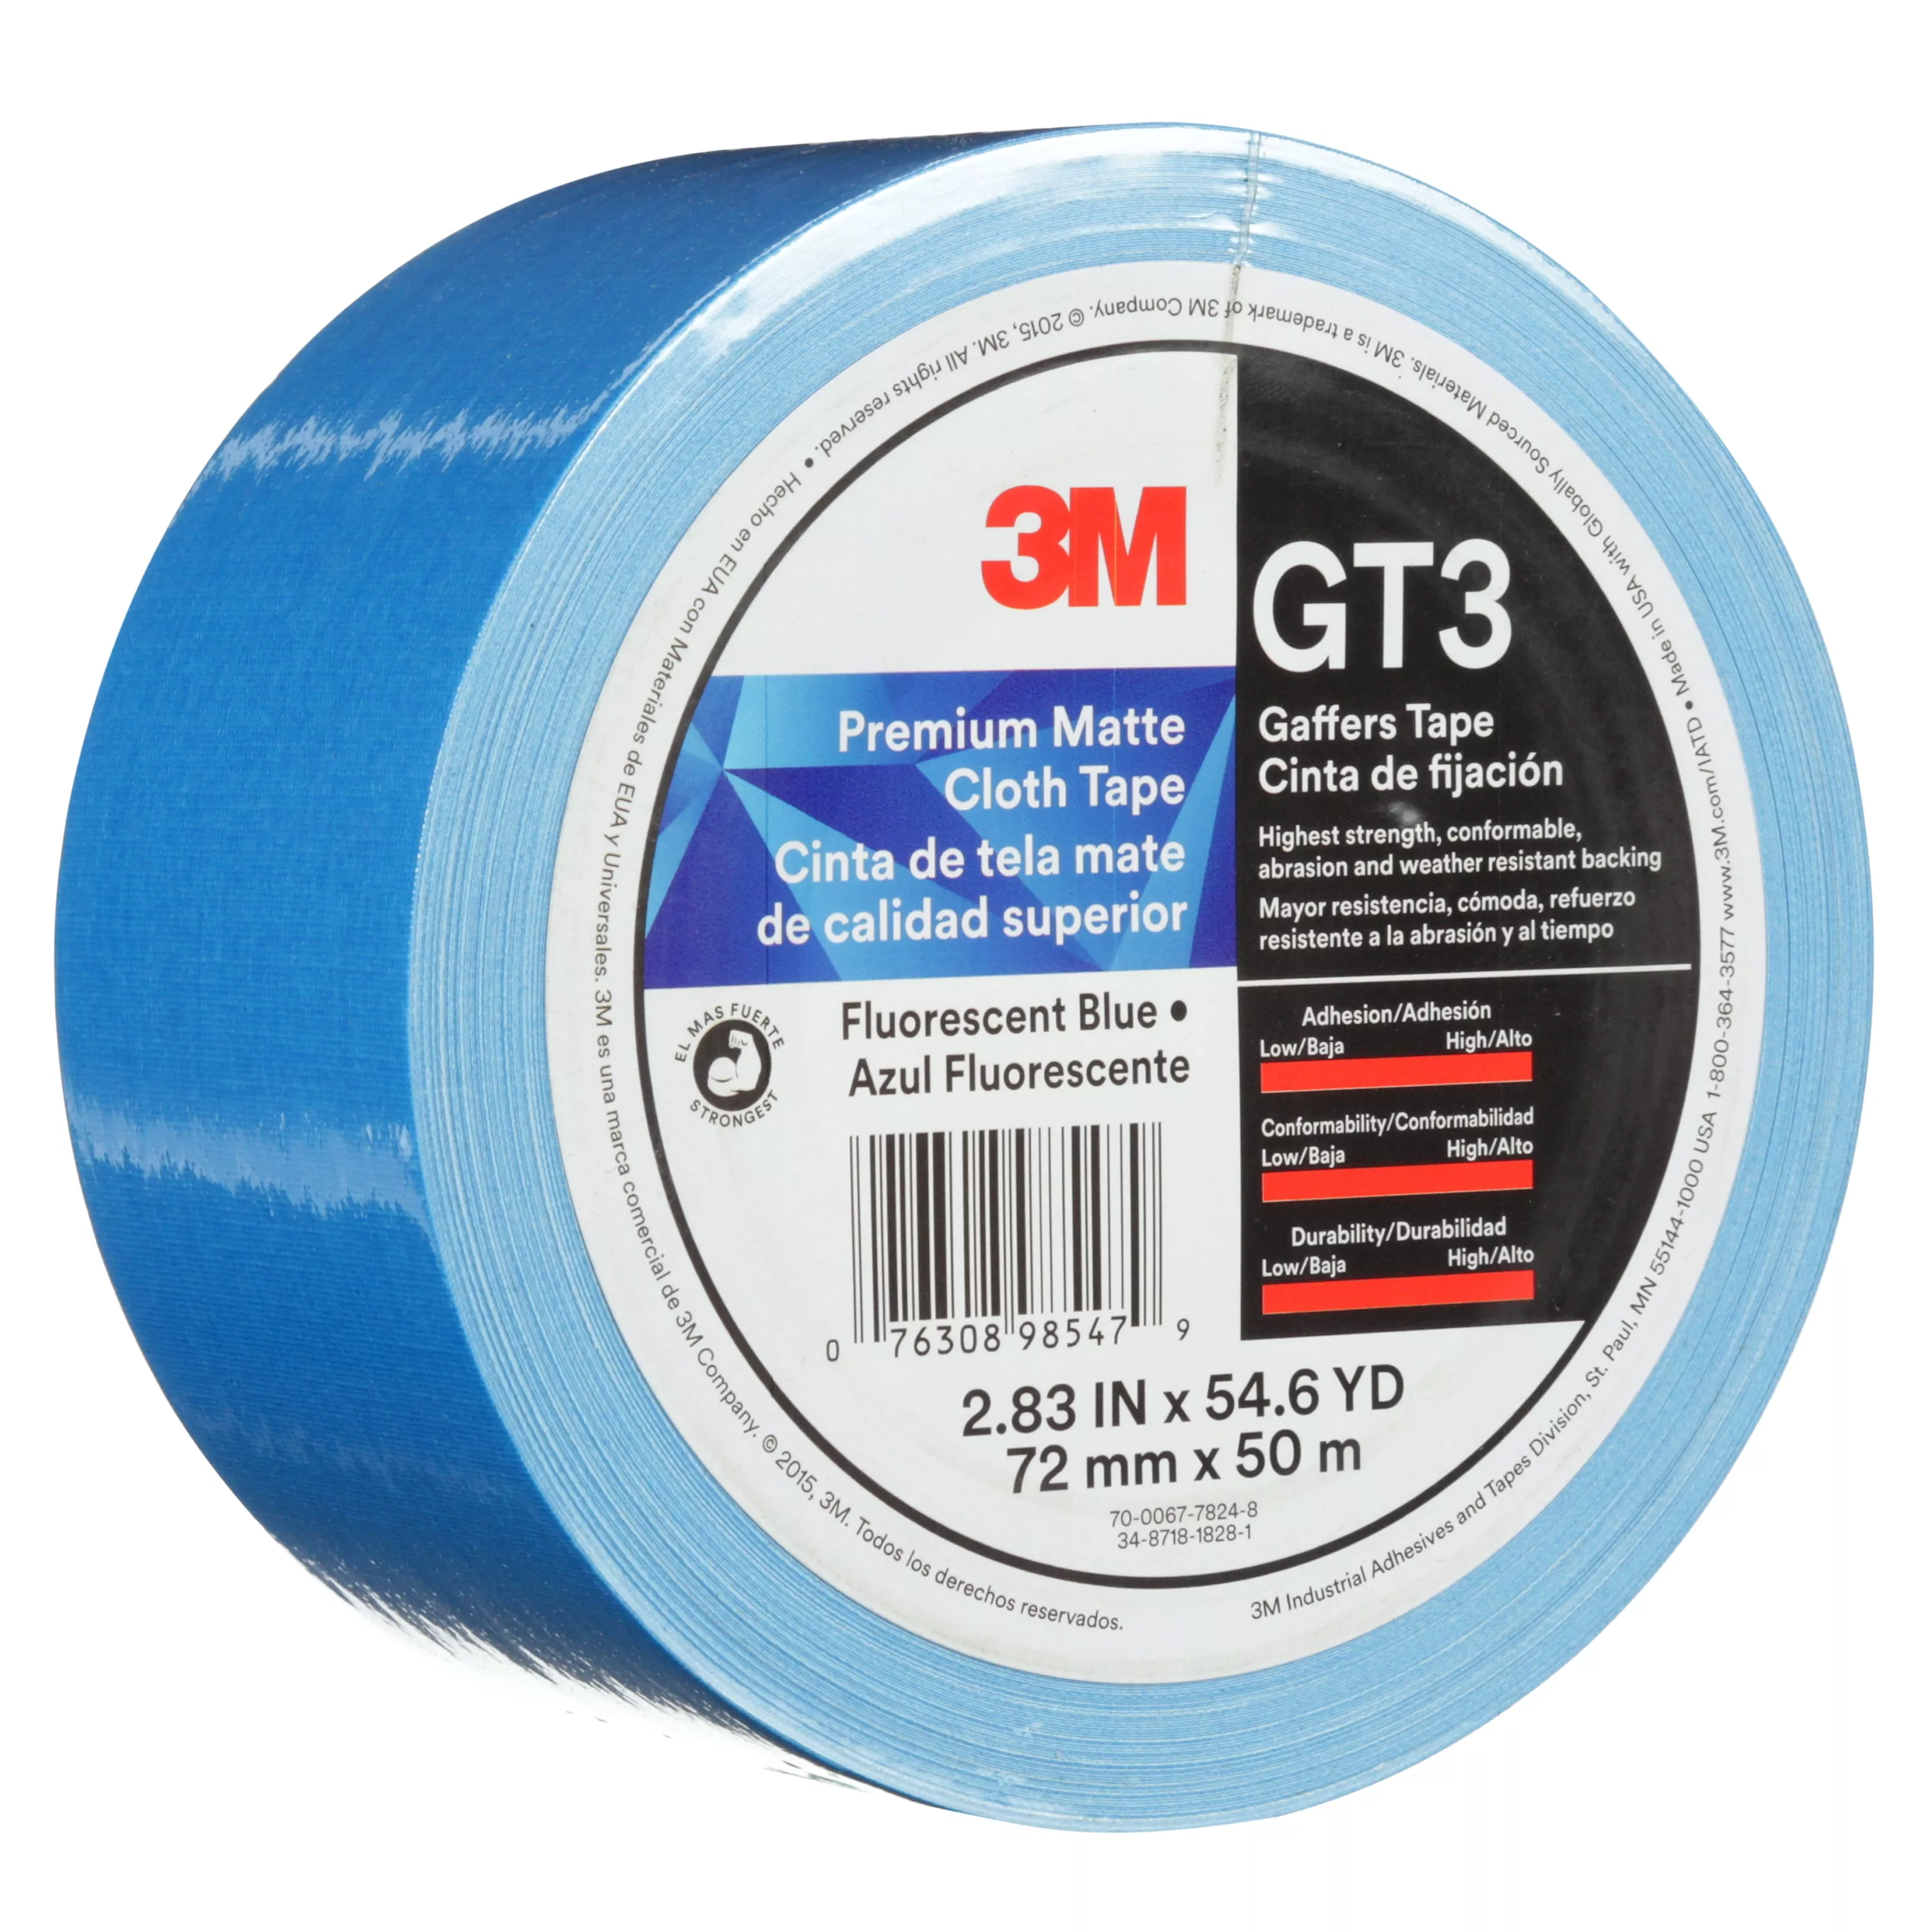 3M™ Premium Matte Cloth (Gaffers) Tape GT3, Fluorescent Blue, 72 mm x 50
m, 11 mil, 16/Case